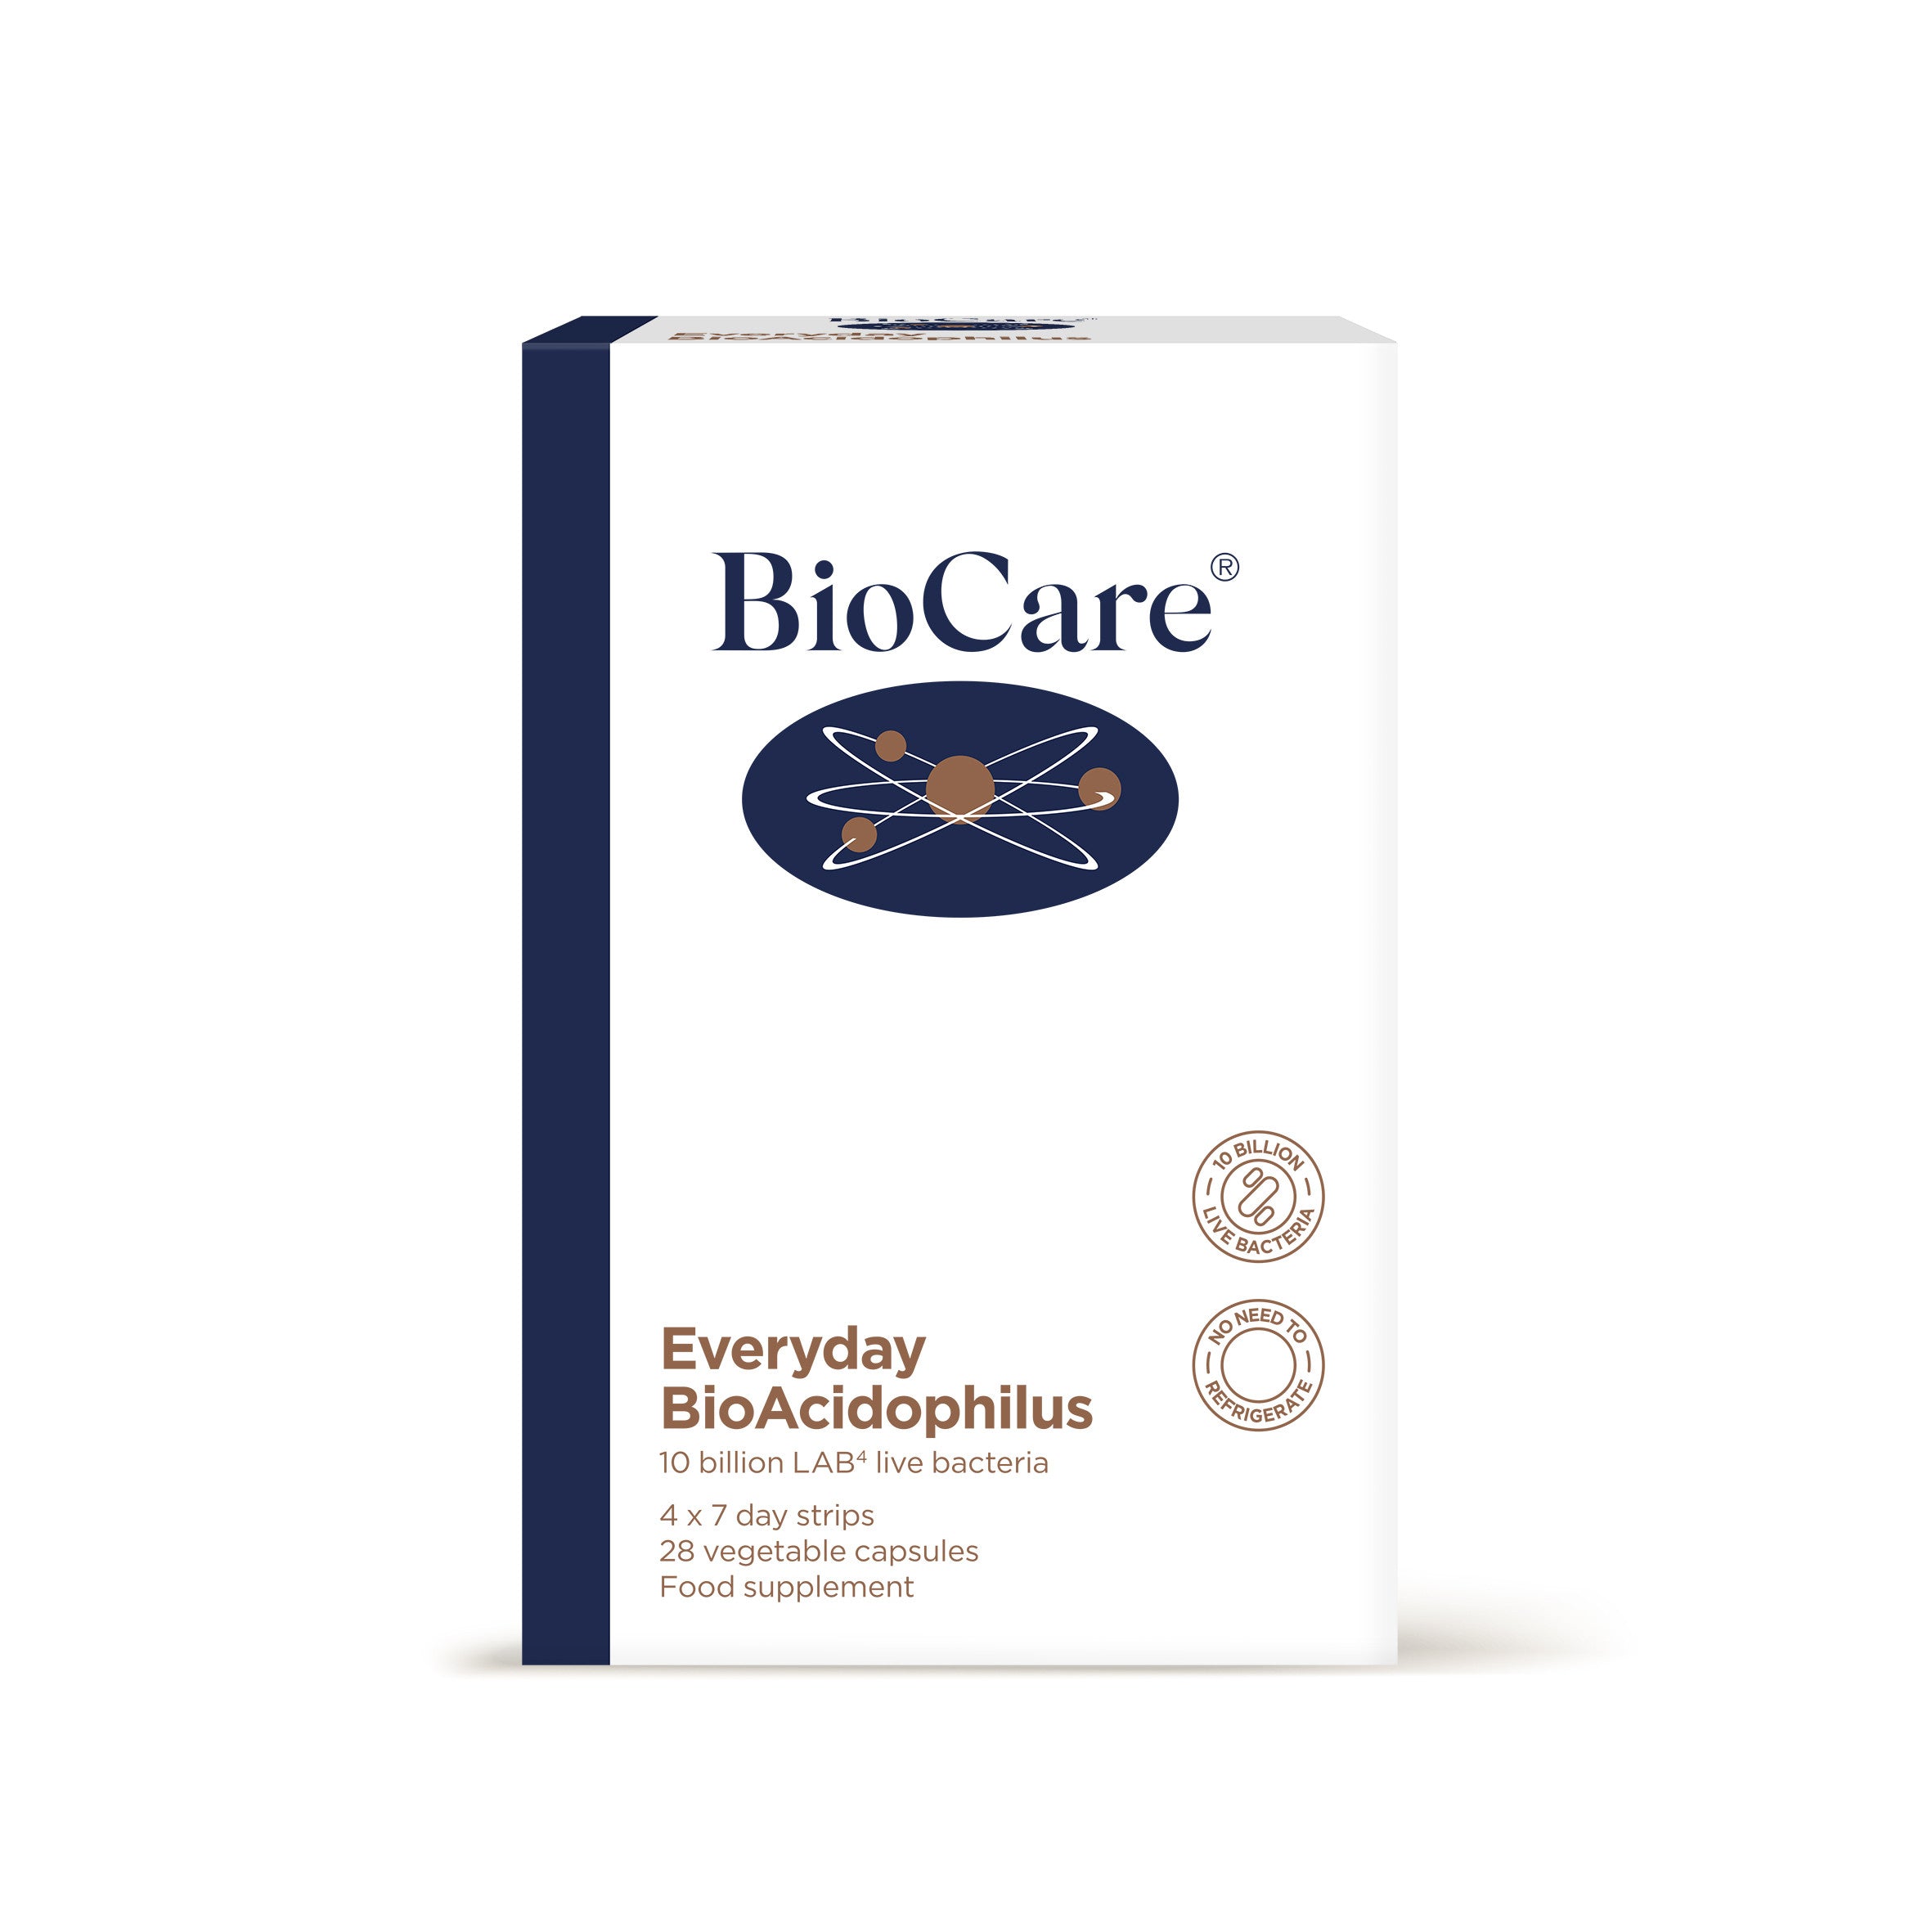 Biocare Everyday BioAcidophilus (Probiotic 10 billion per capsule) - MicroBio Health